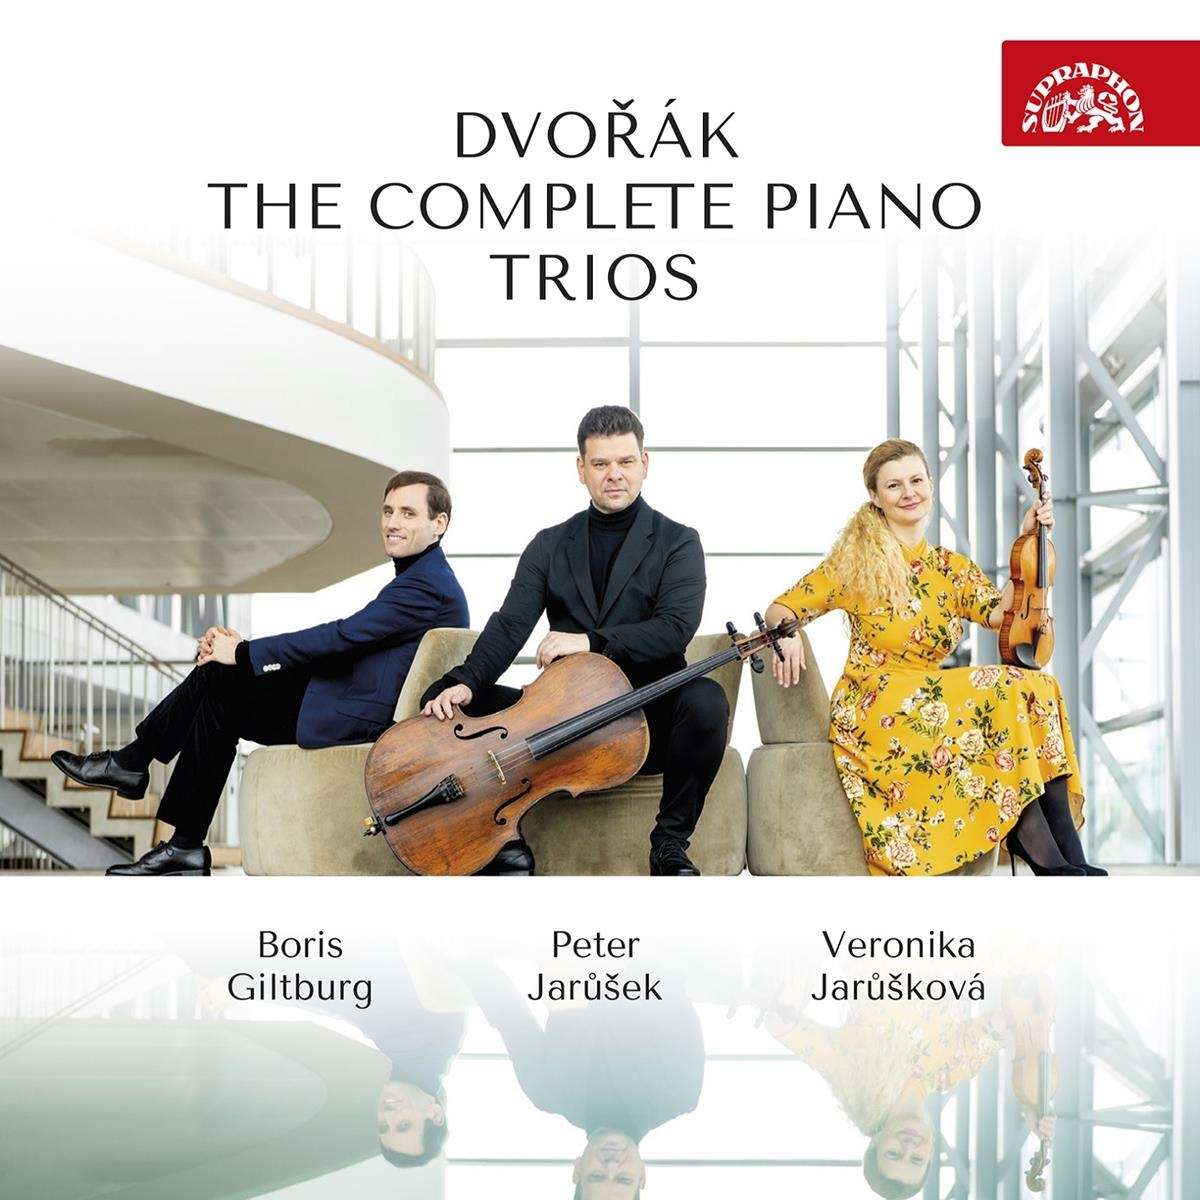 Giltburg, Boris / Peter Jarusek / Veronika Jaruskova - Dvorak: Complete Piano Trios